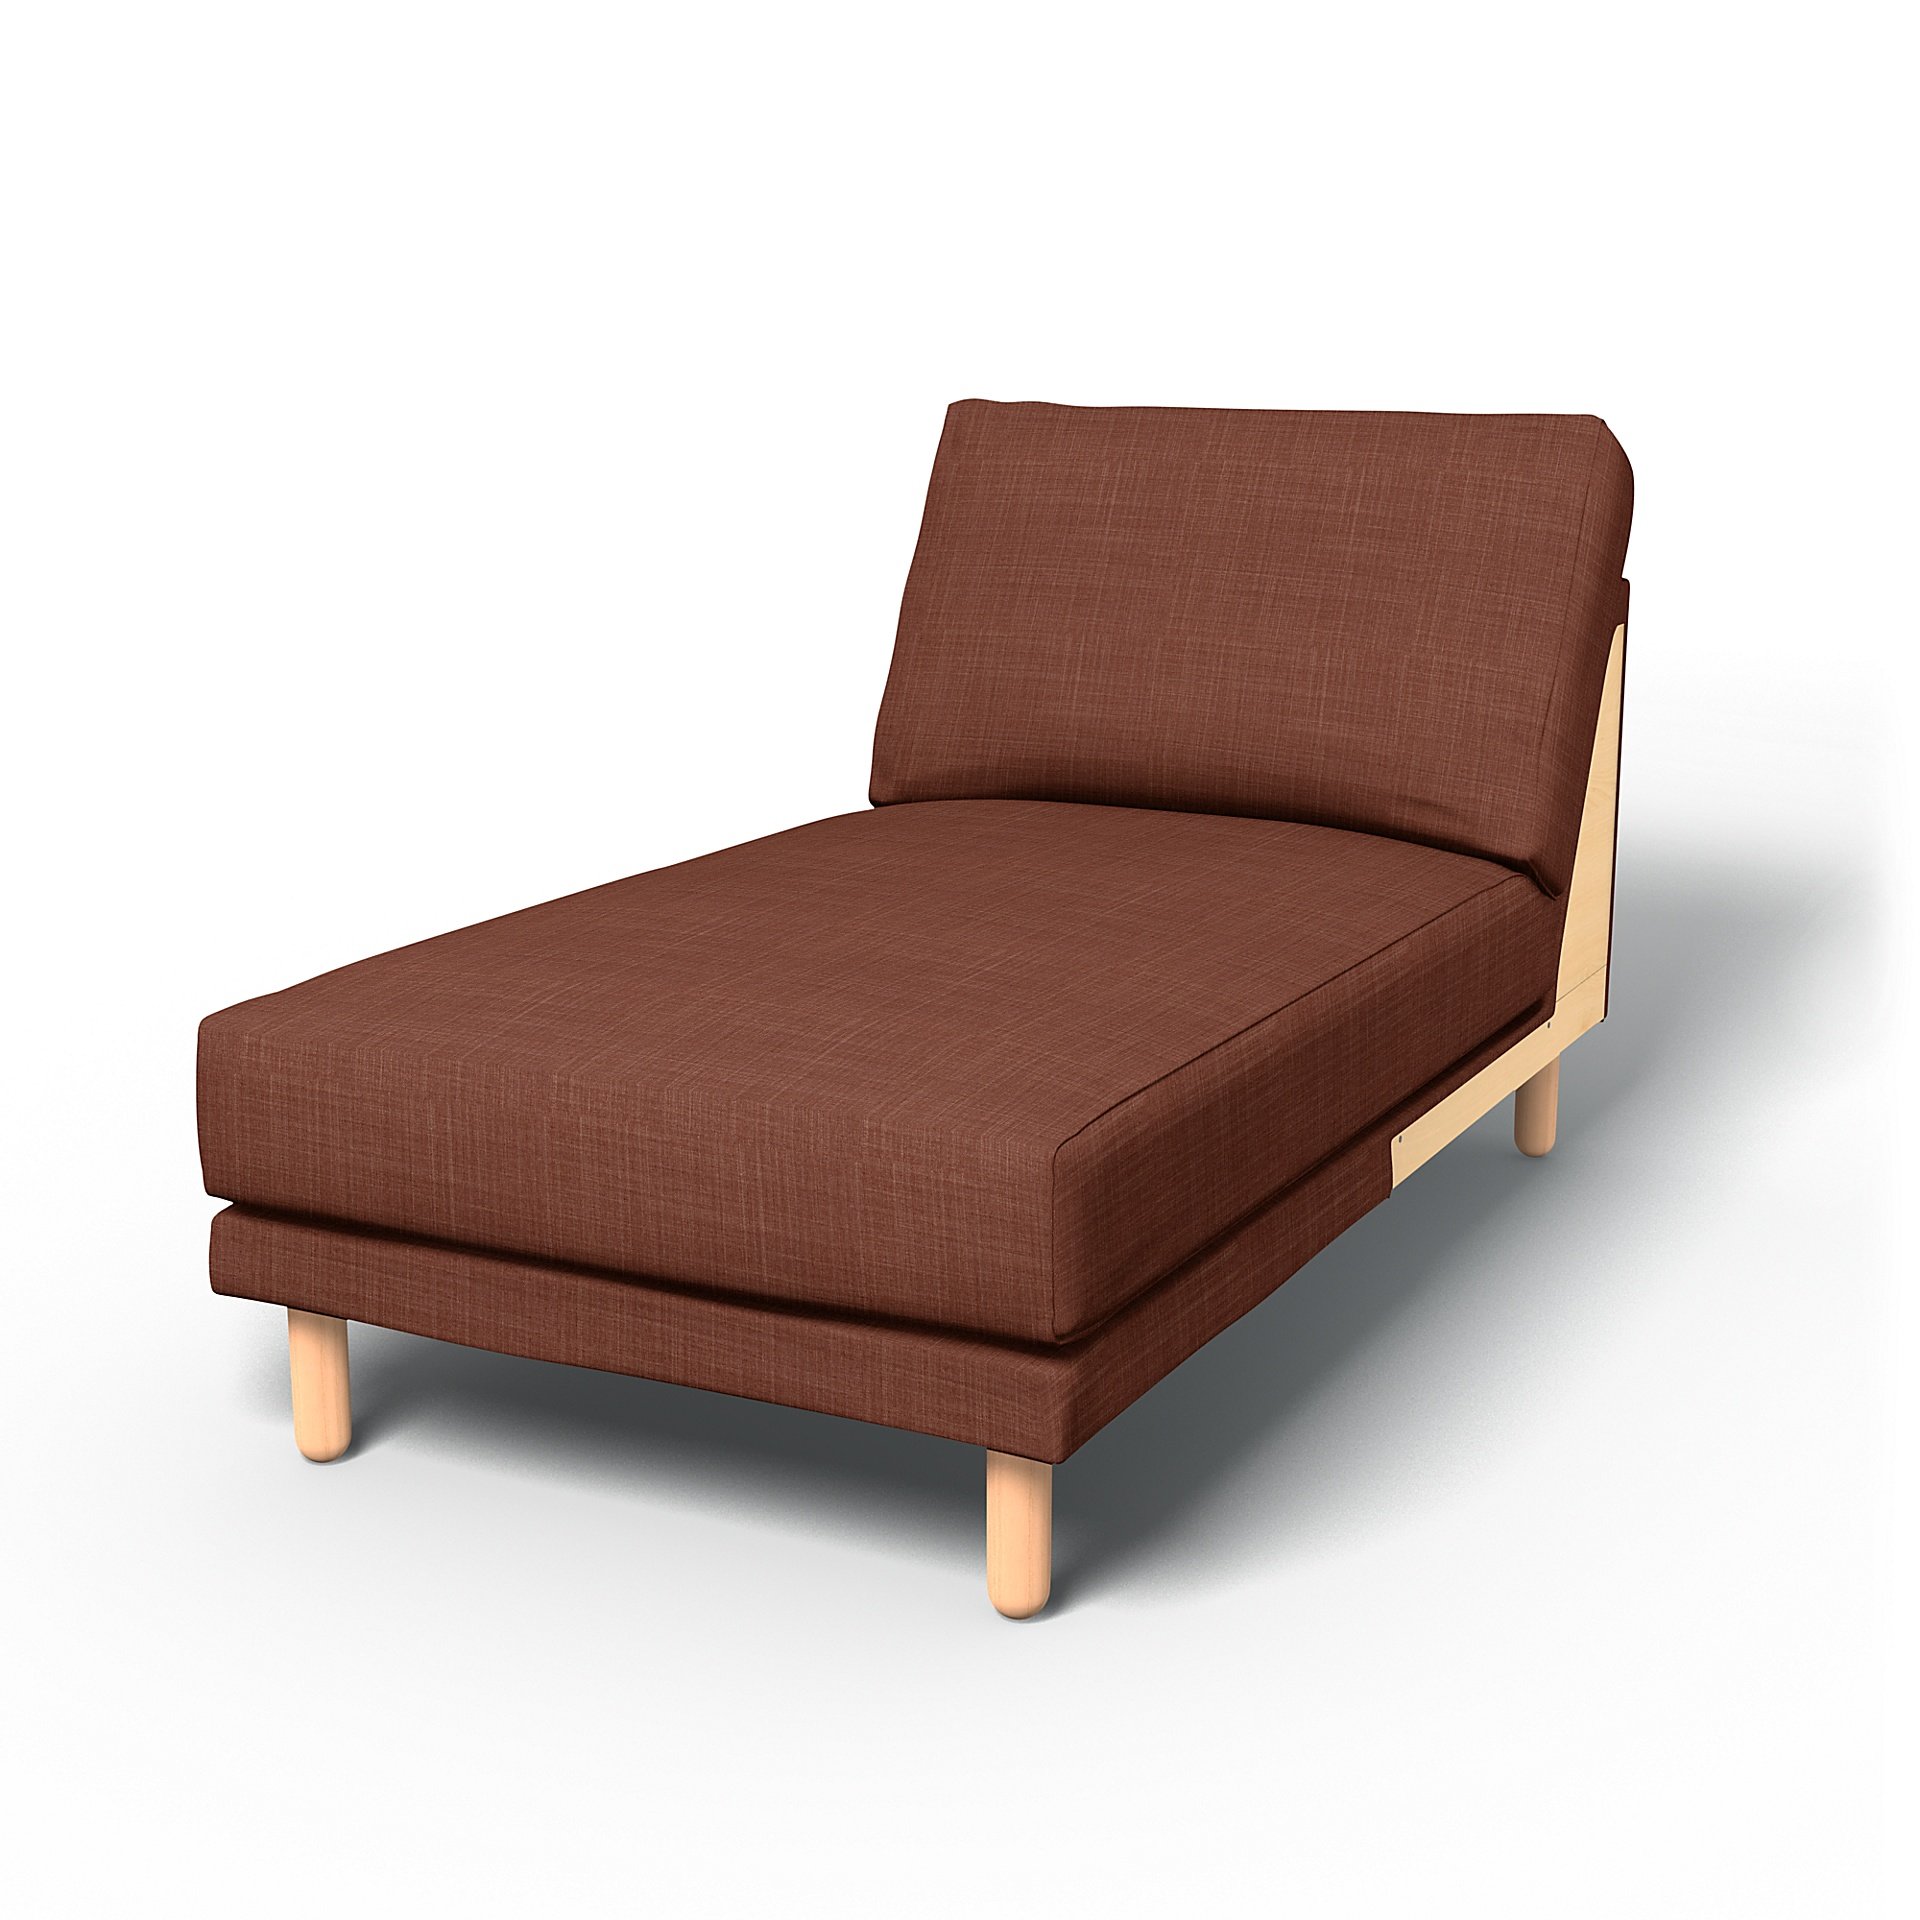 IKEA - Norsborg Chaise Longue Add-on Unit Cover, Rust, Boucle & Texture - Bemz